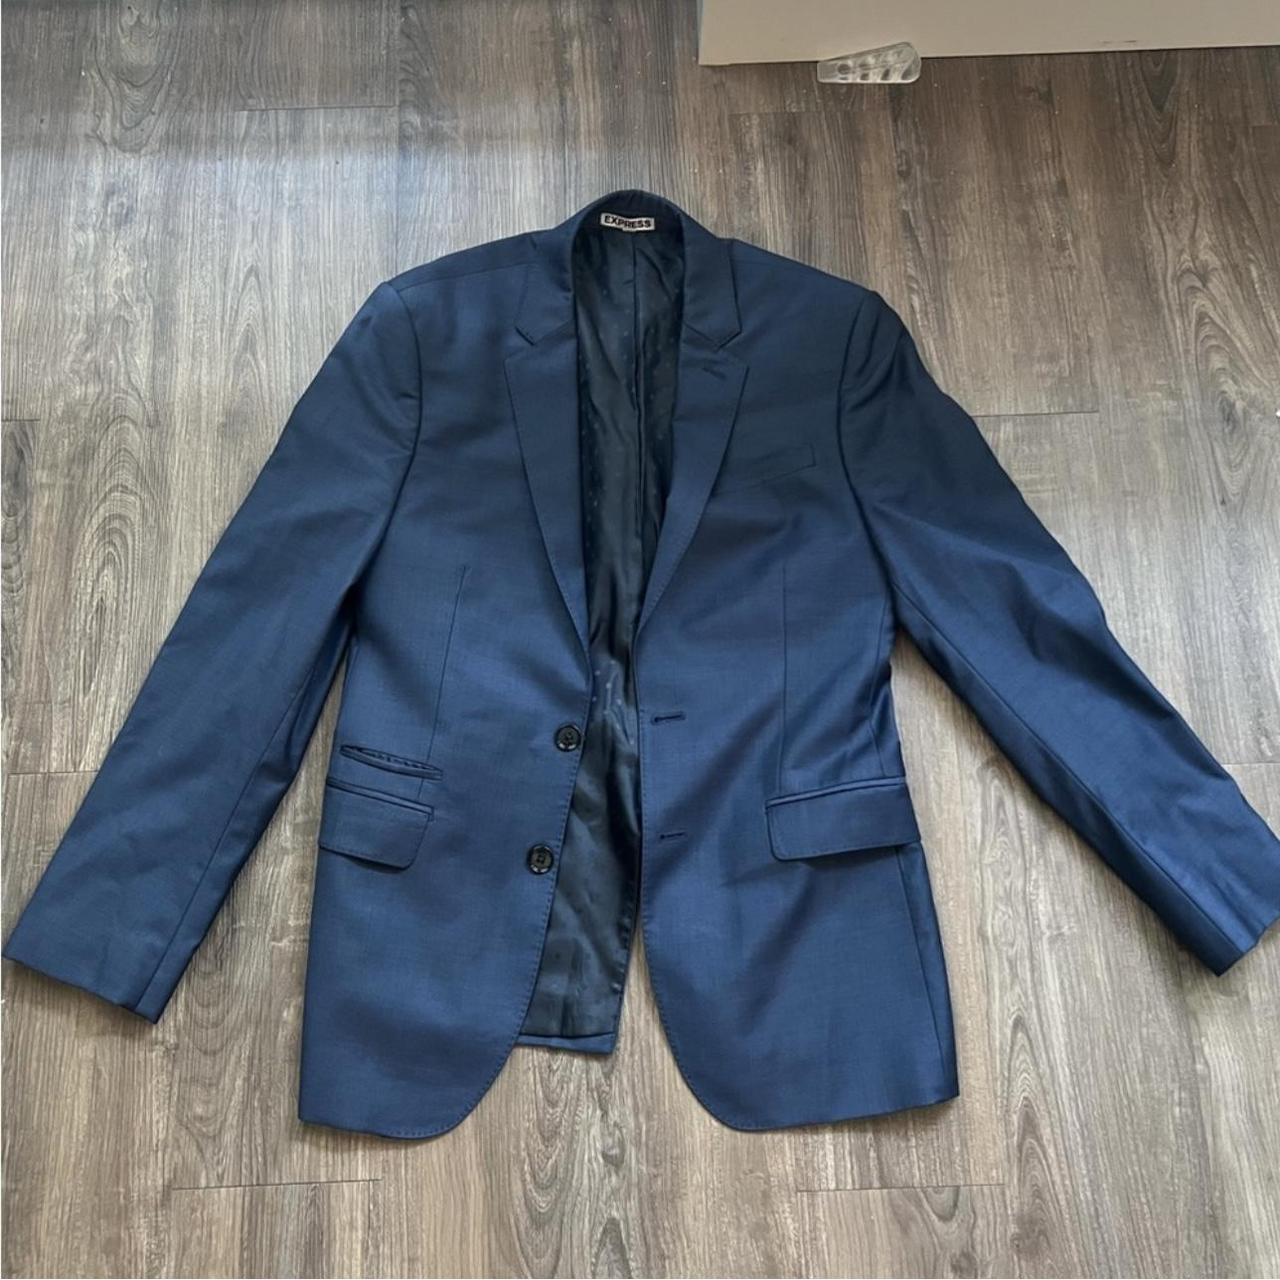 Suit Jacket/Blazer(36R) + Vest, Express Navy Blue (XS) - Depop